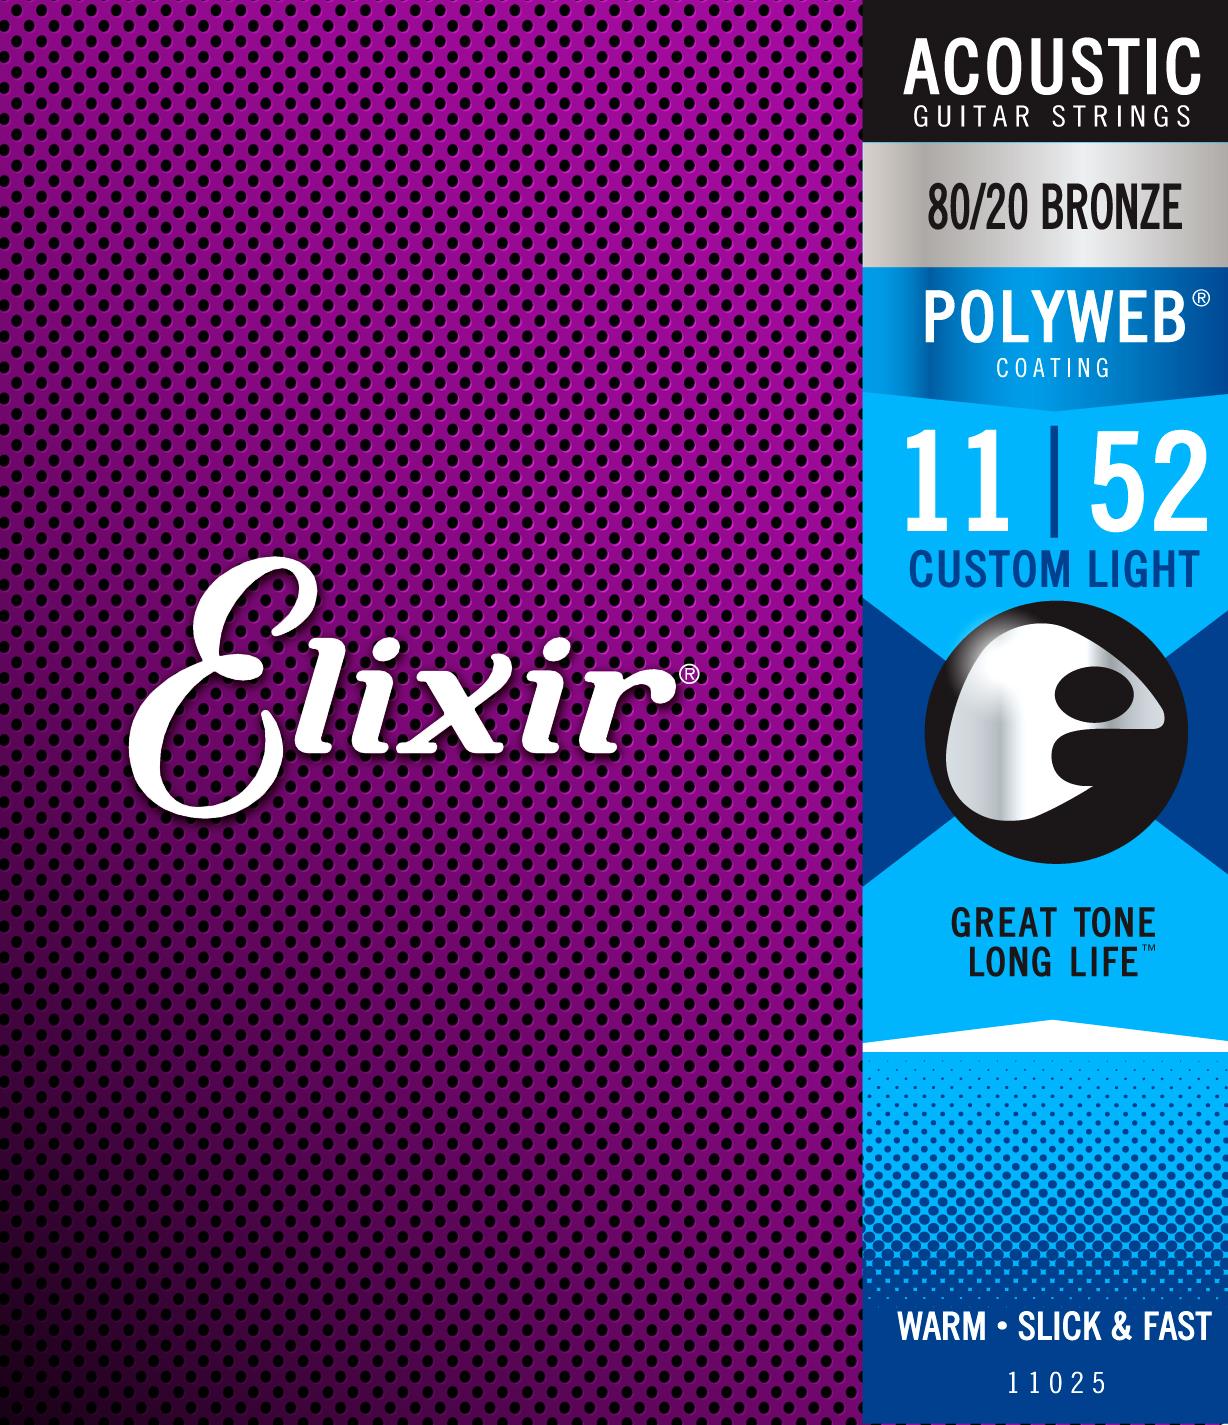 elixir-11025-8020-bronze-polyweb-custom-light-11-52-2 אקוסטית: 11-52 – Elixir 11025 Bronze POLYWEB